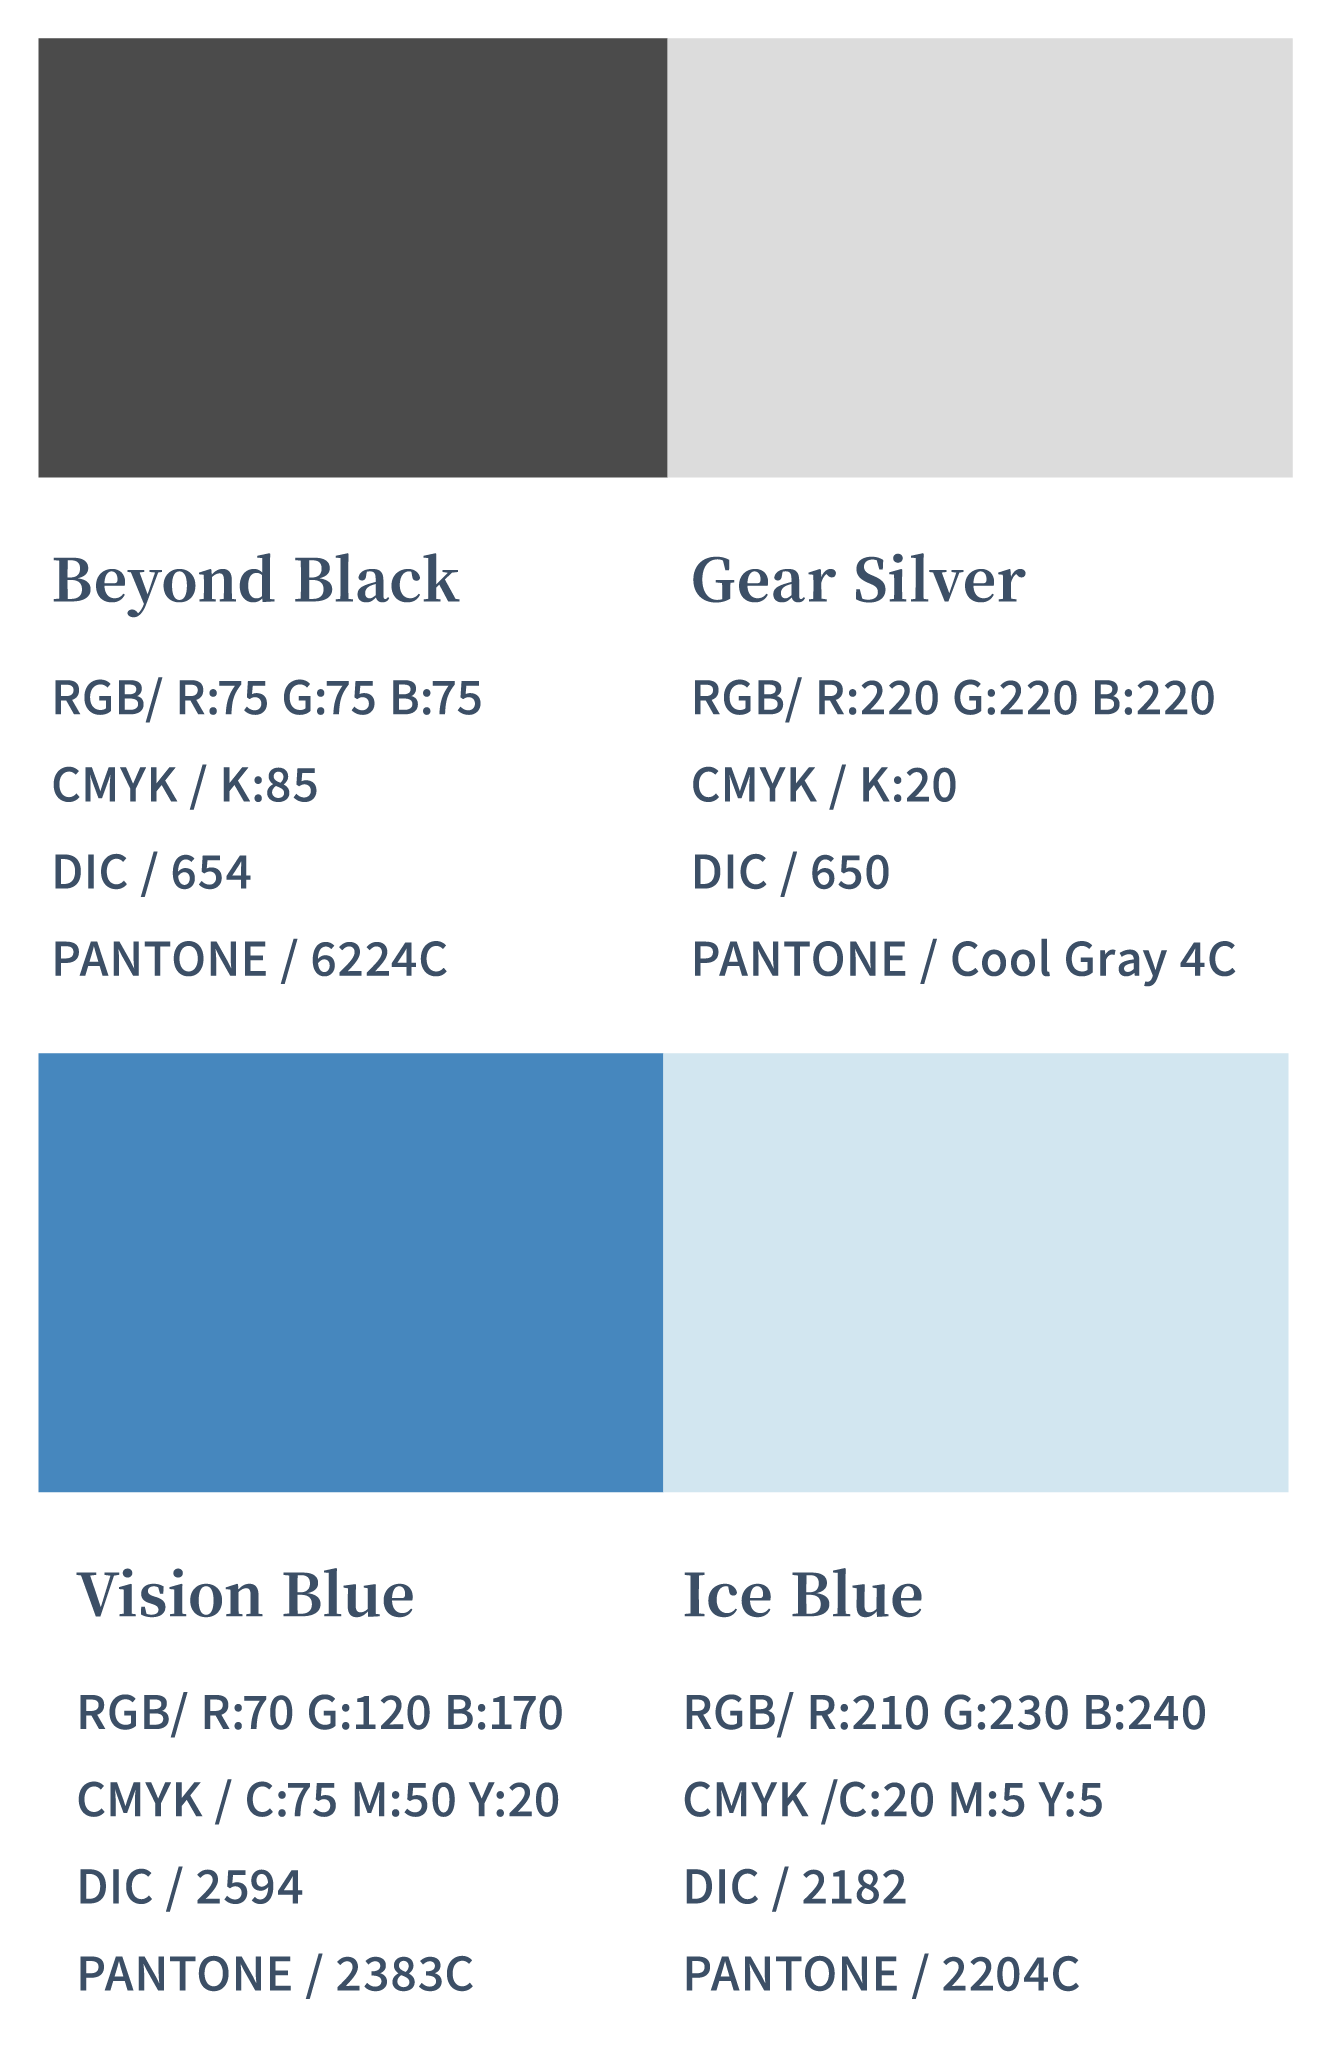 Beyond Black Gear Silver Vision Blue Ice Blue